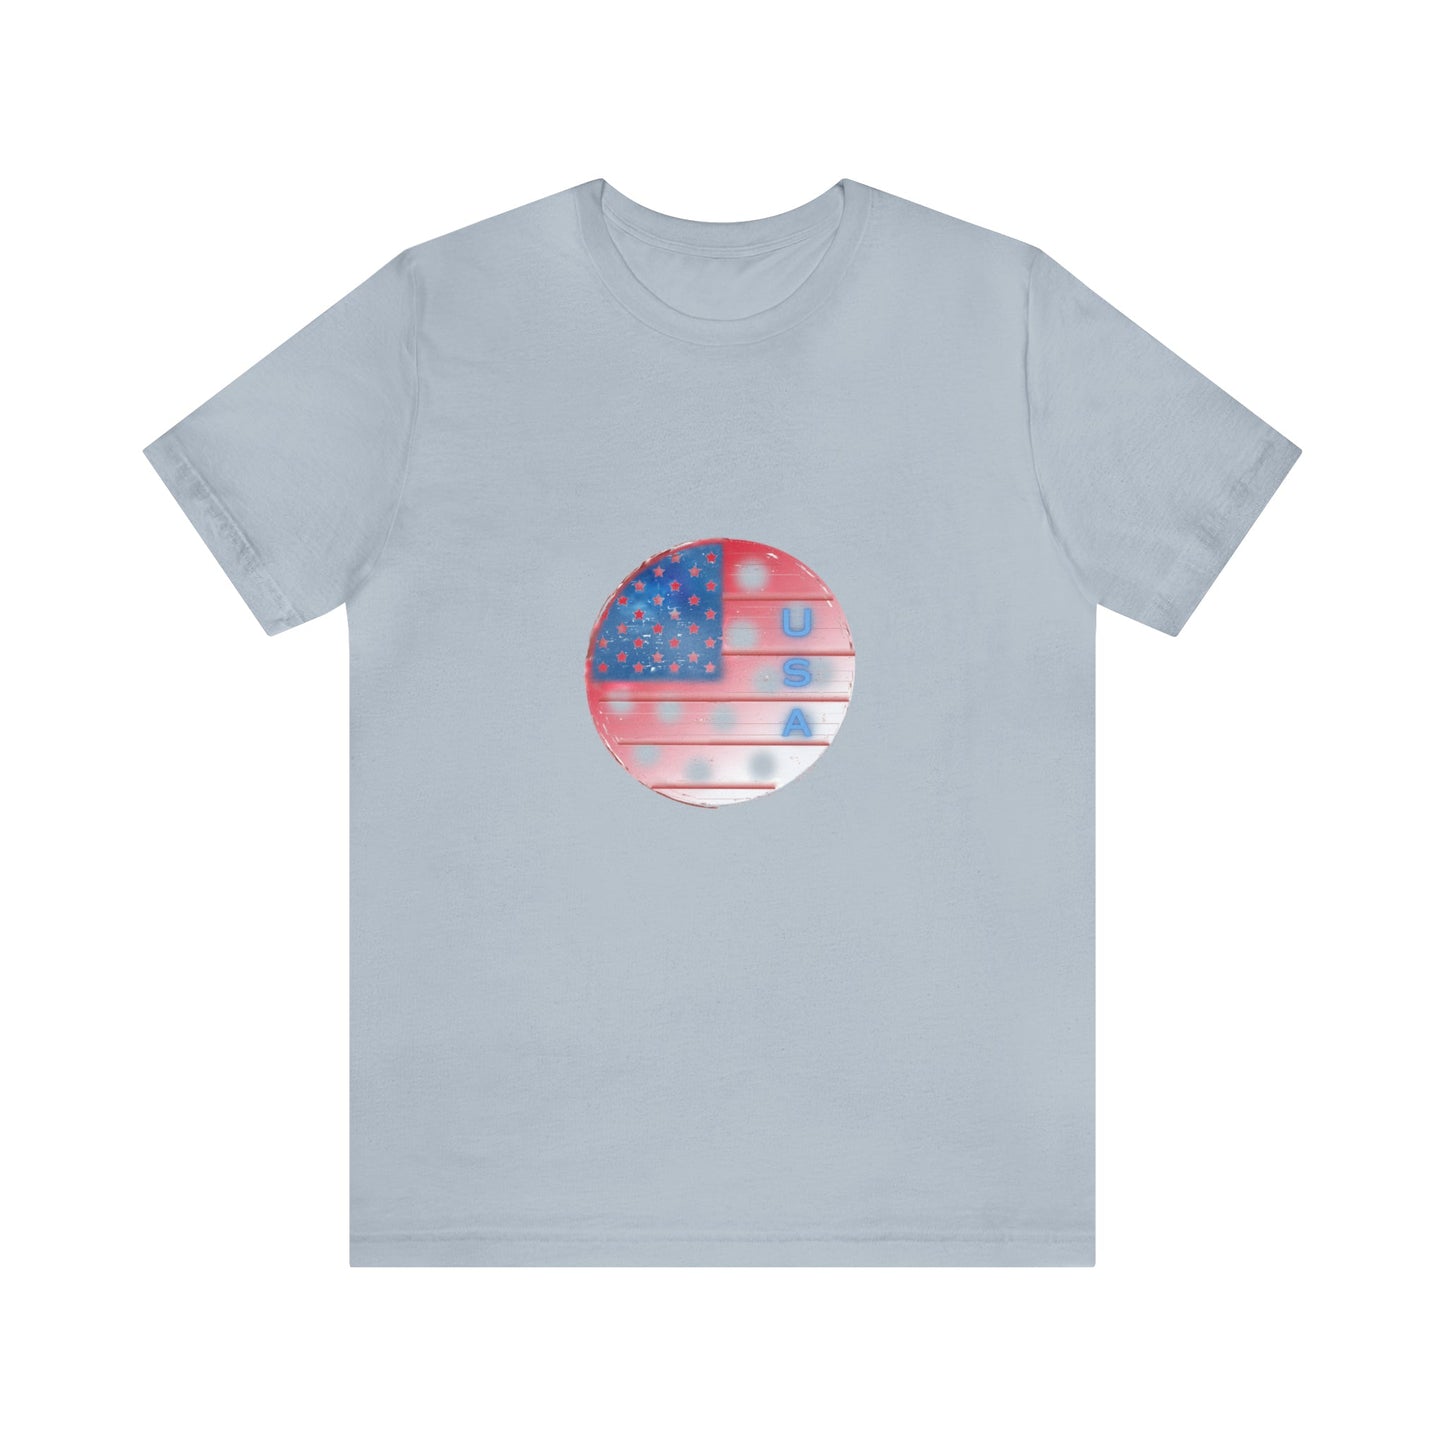 USA 1965 Pickleball T-Shirt